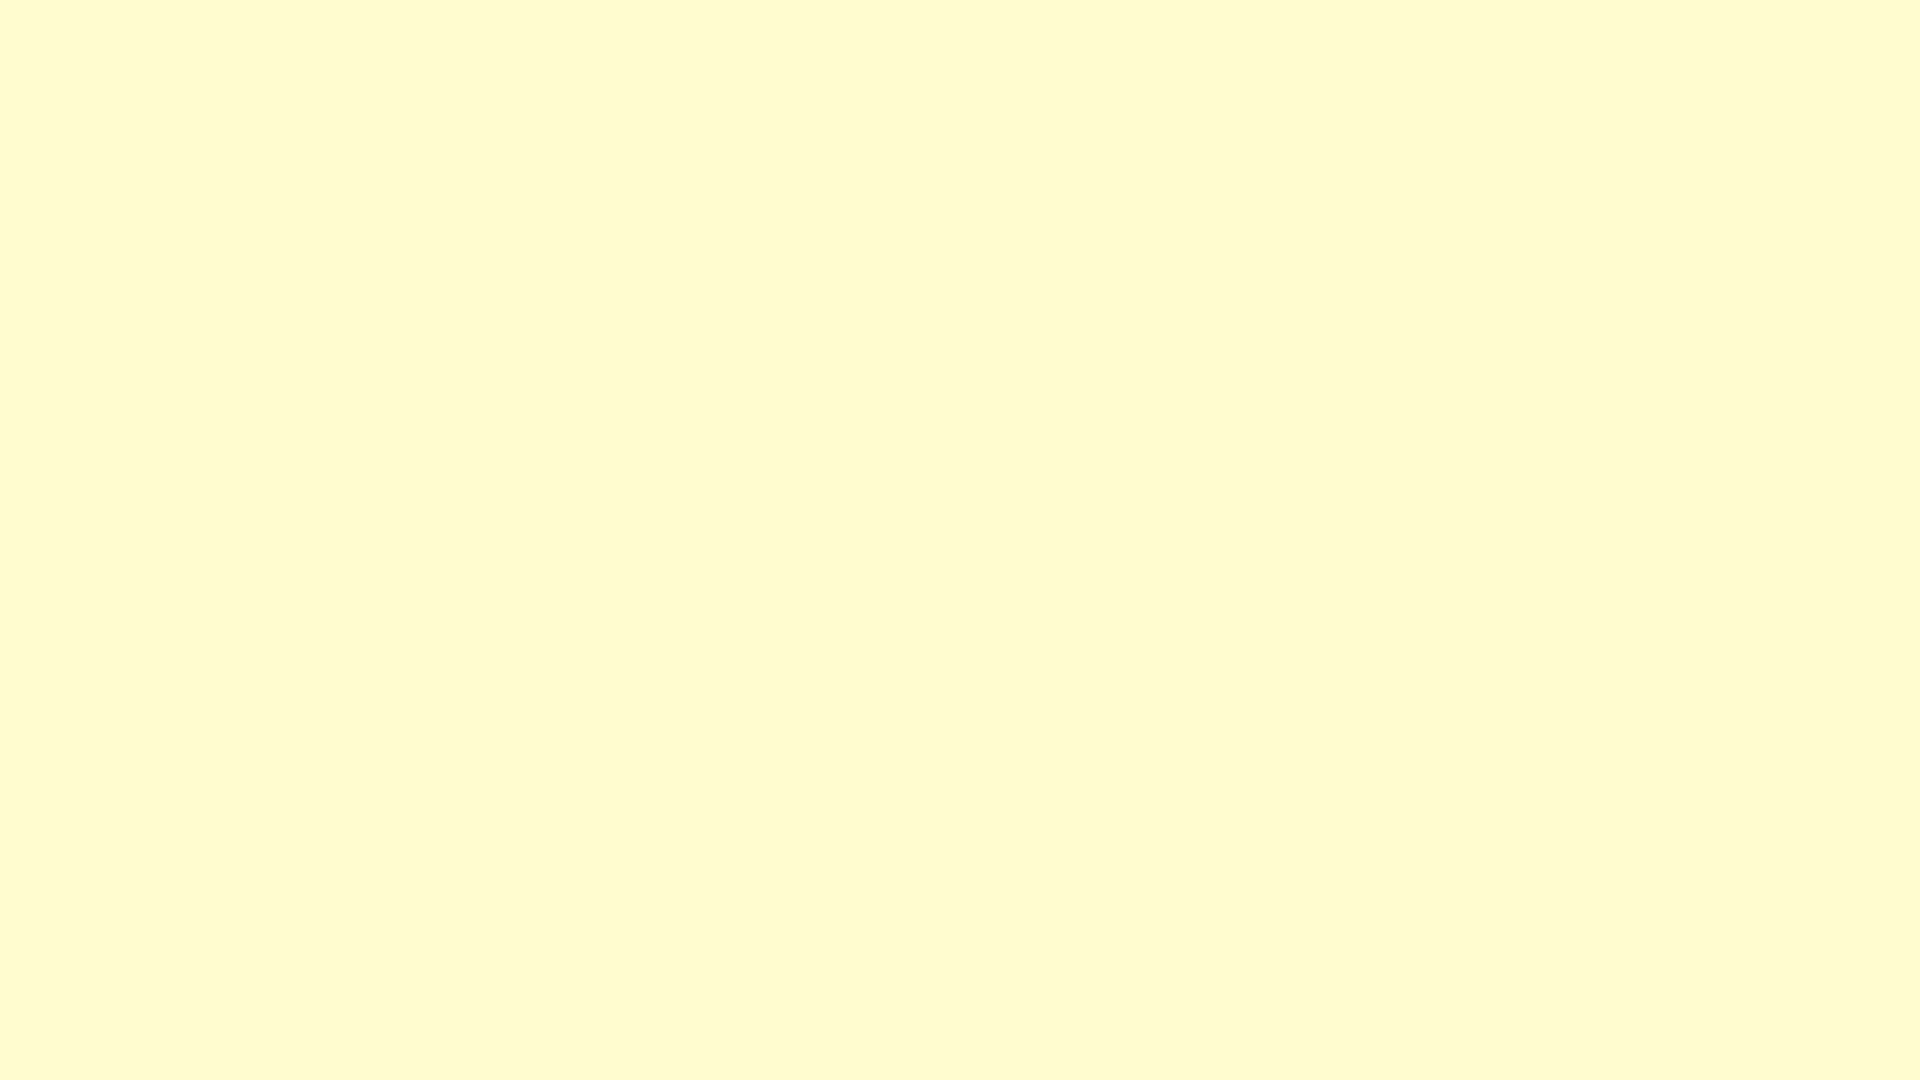 Creme farve baggrund gule trekantsformede objektmønster